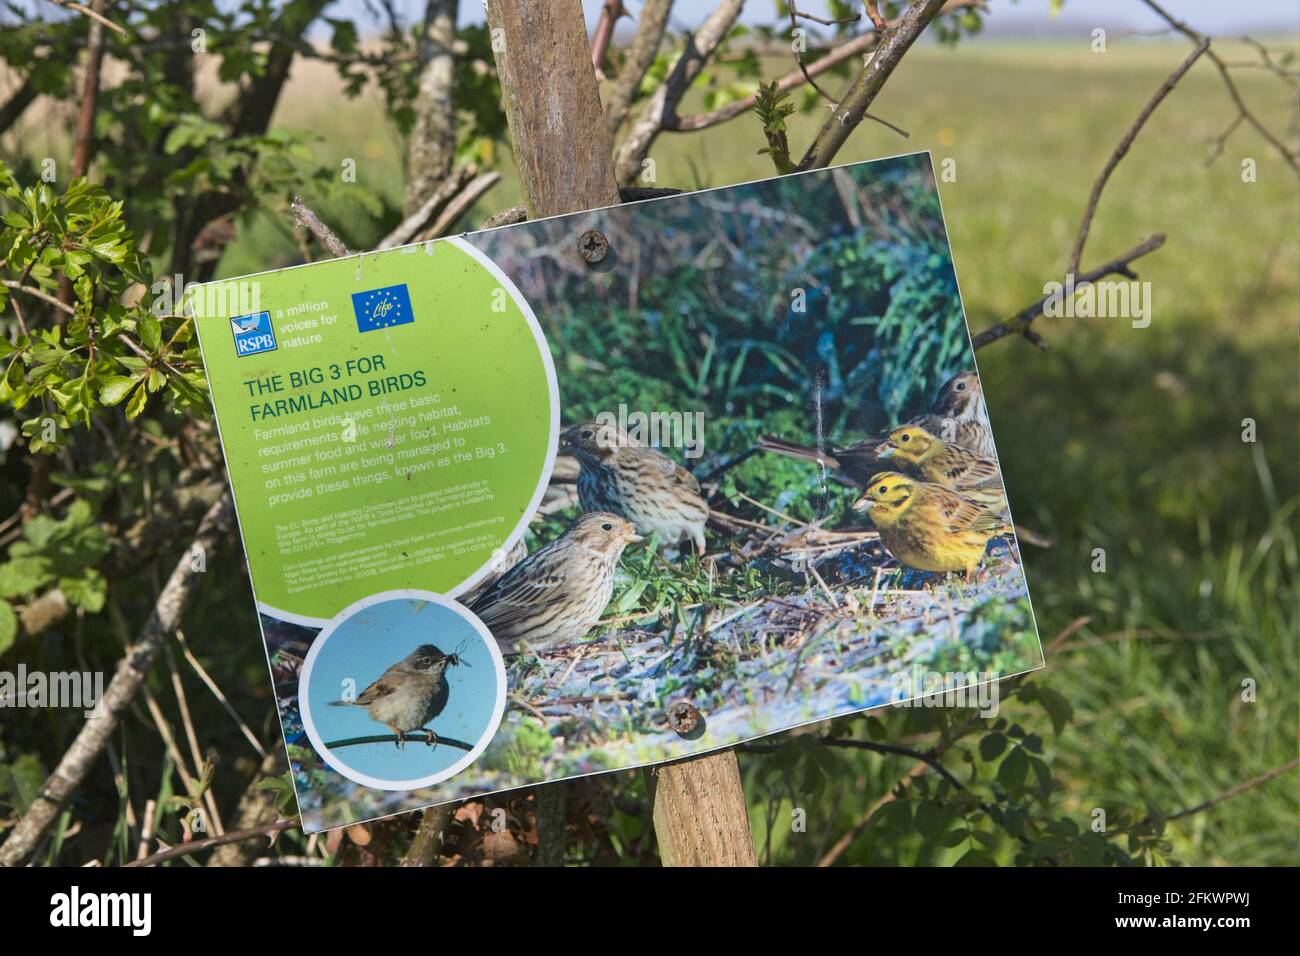 Farmland set aside for farmland birds near Asthall, Oxfordshire. EU birds and habitats directive Stock Photo